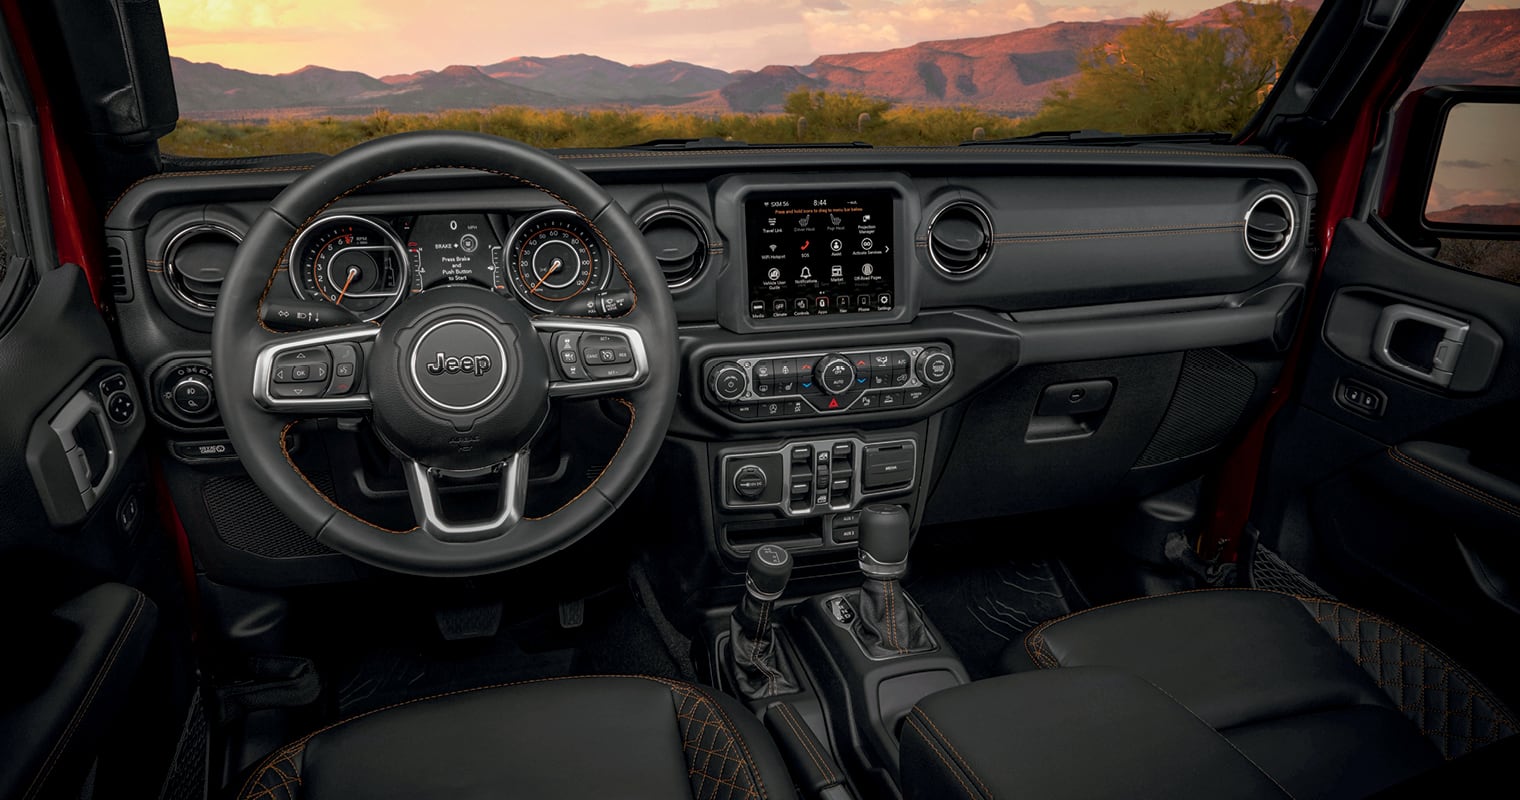 2022 Jeep Gladiator interior dashboard and infotainment